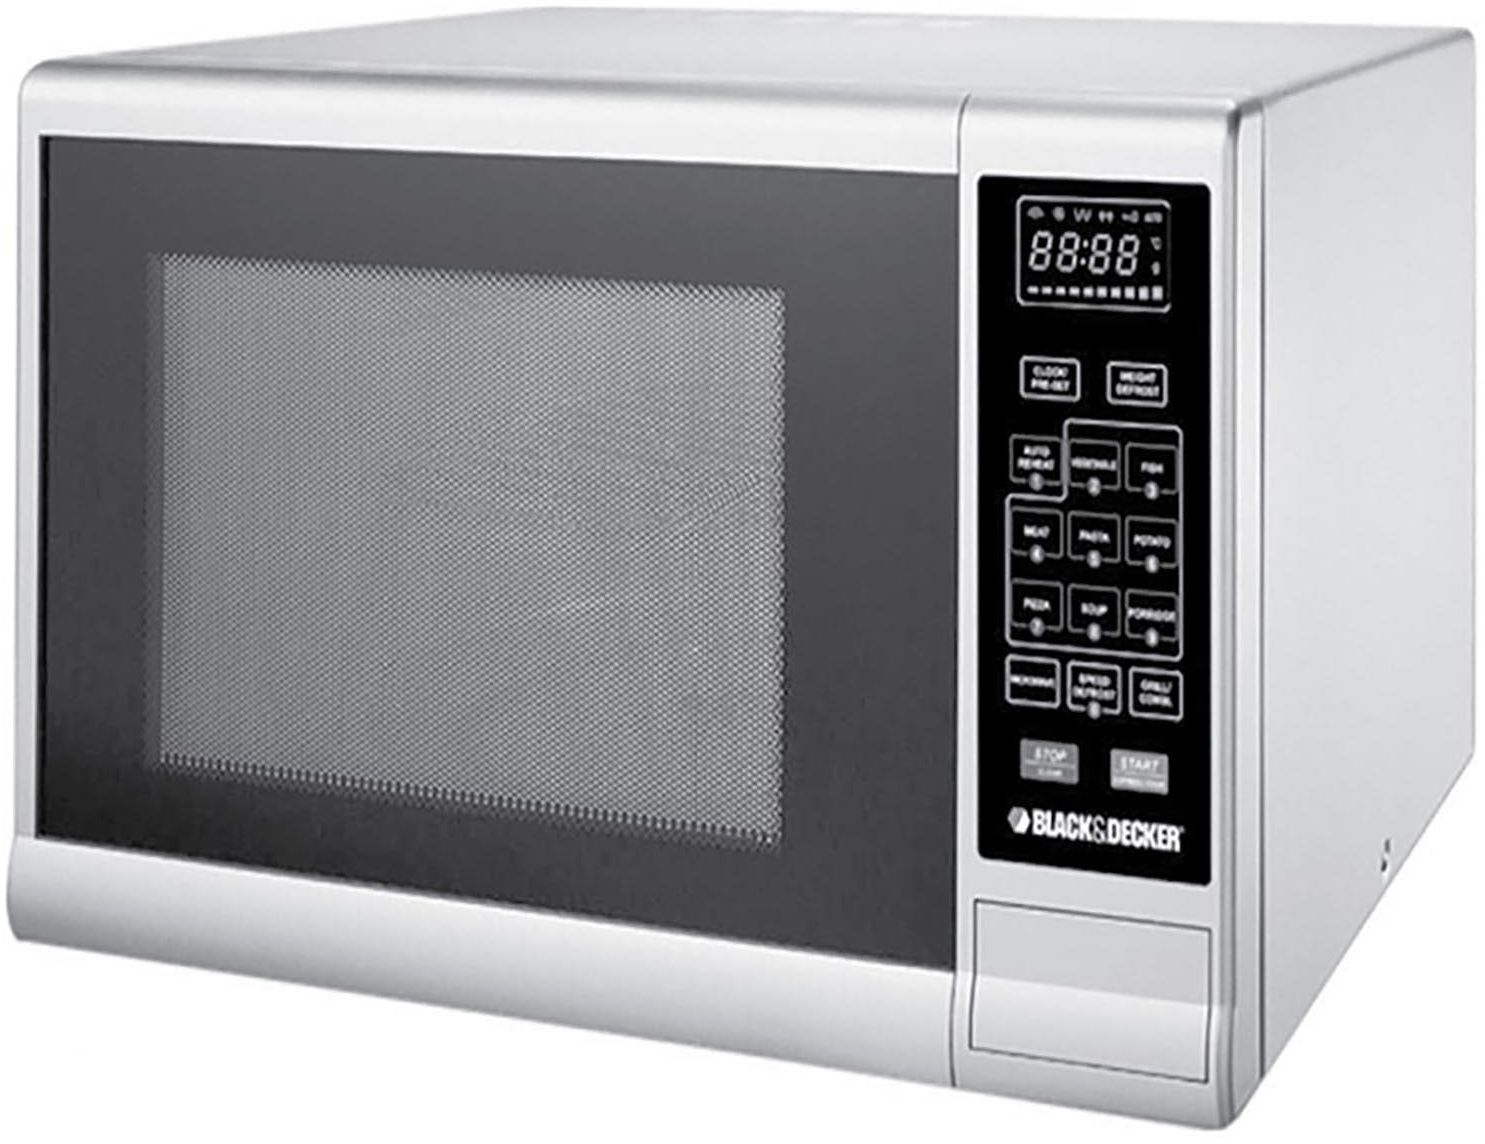 Black & Decker Microwave With Grill , 30 Liters, 900 Watt, Silver